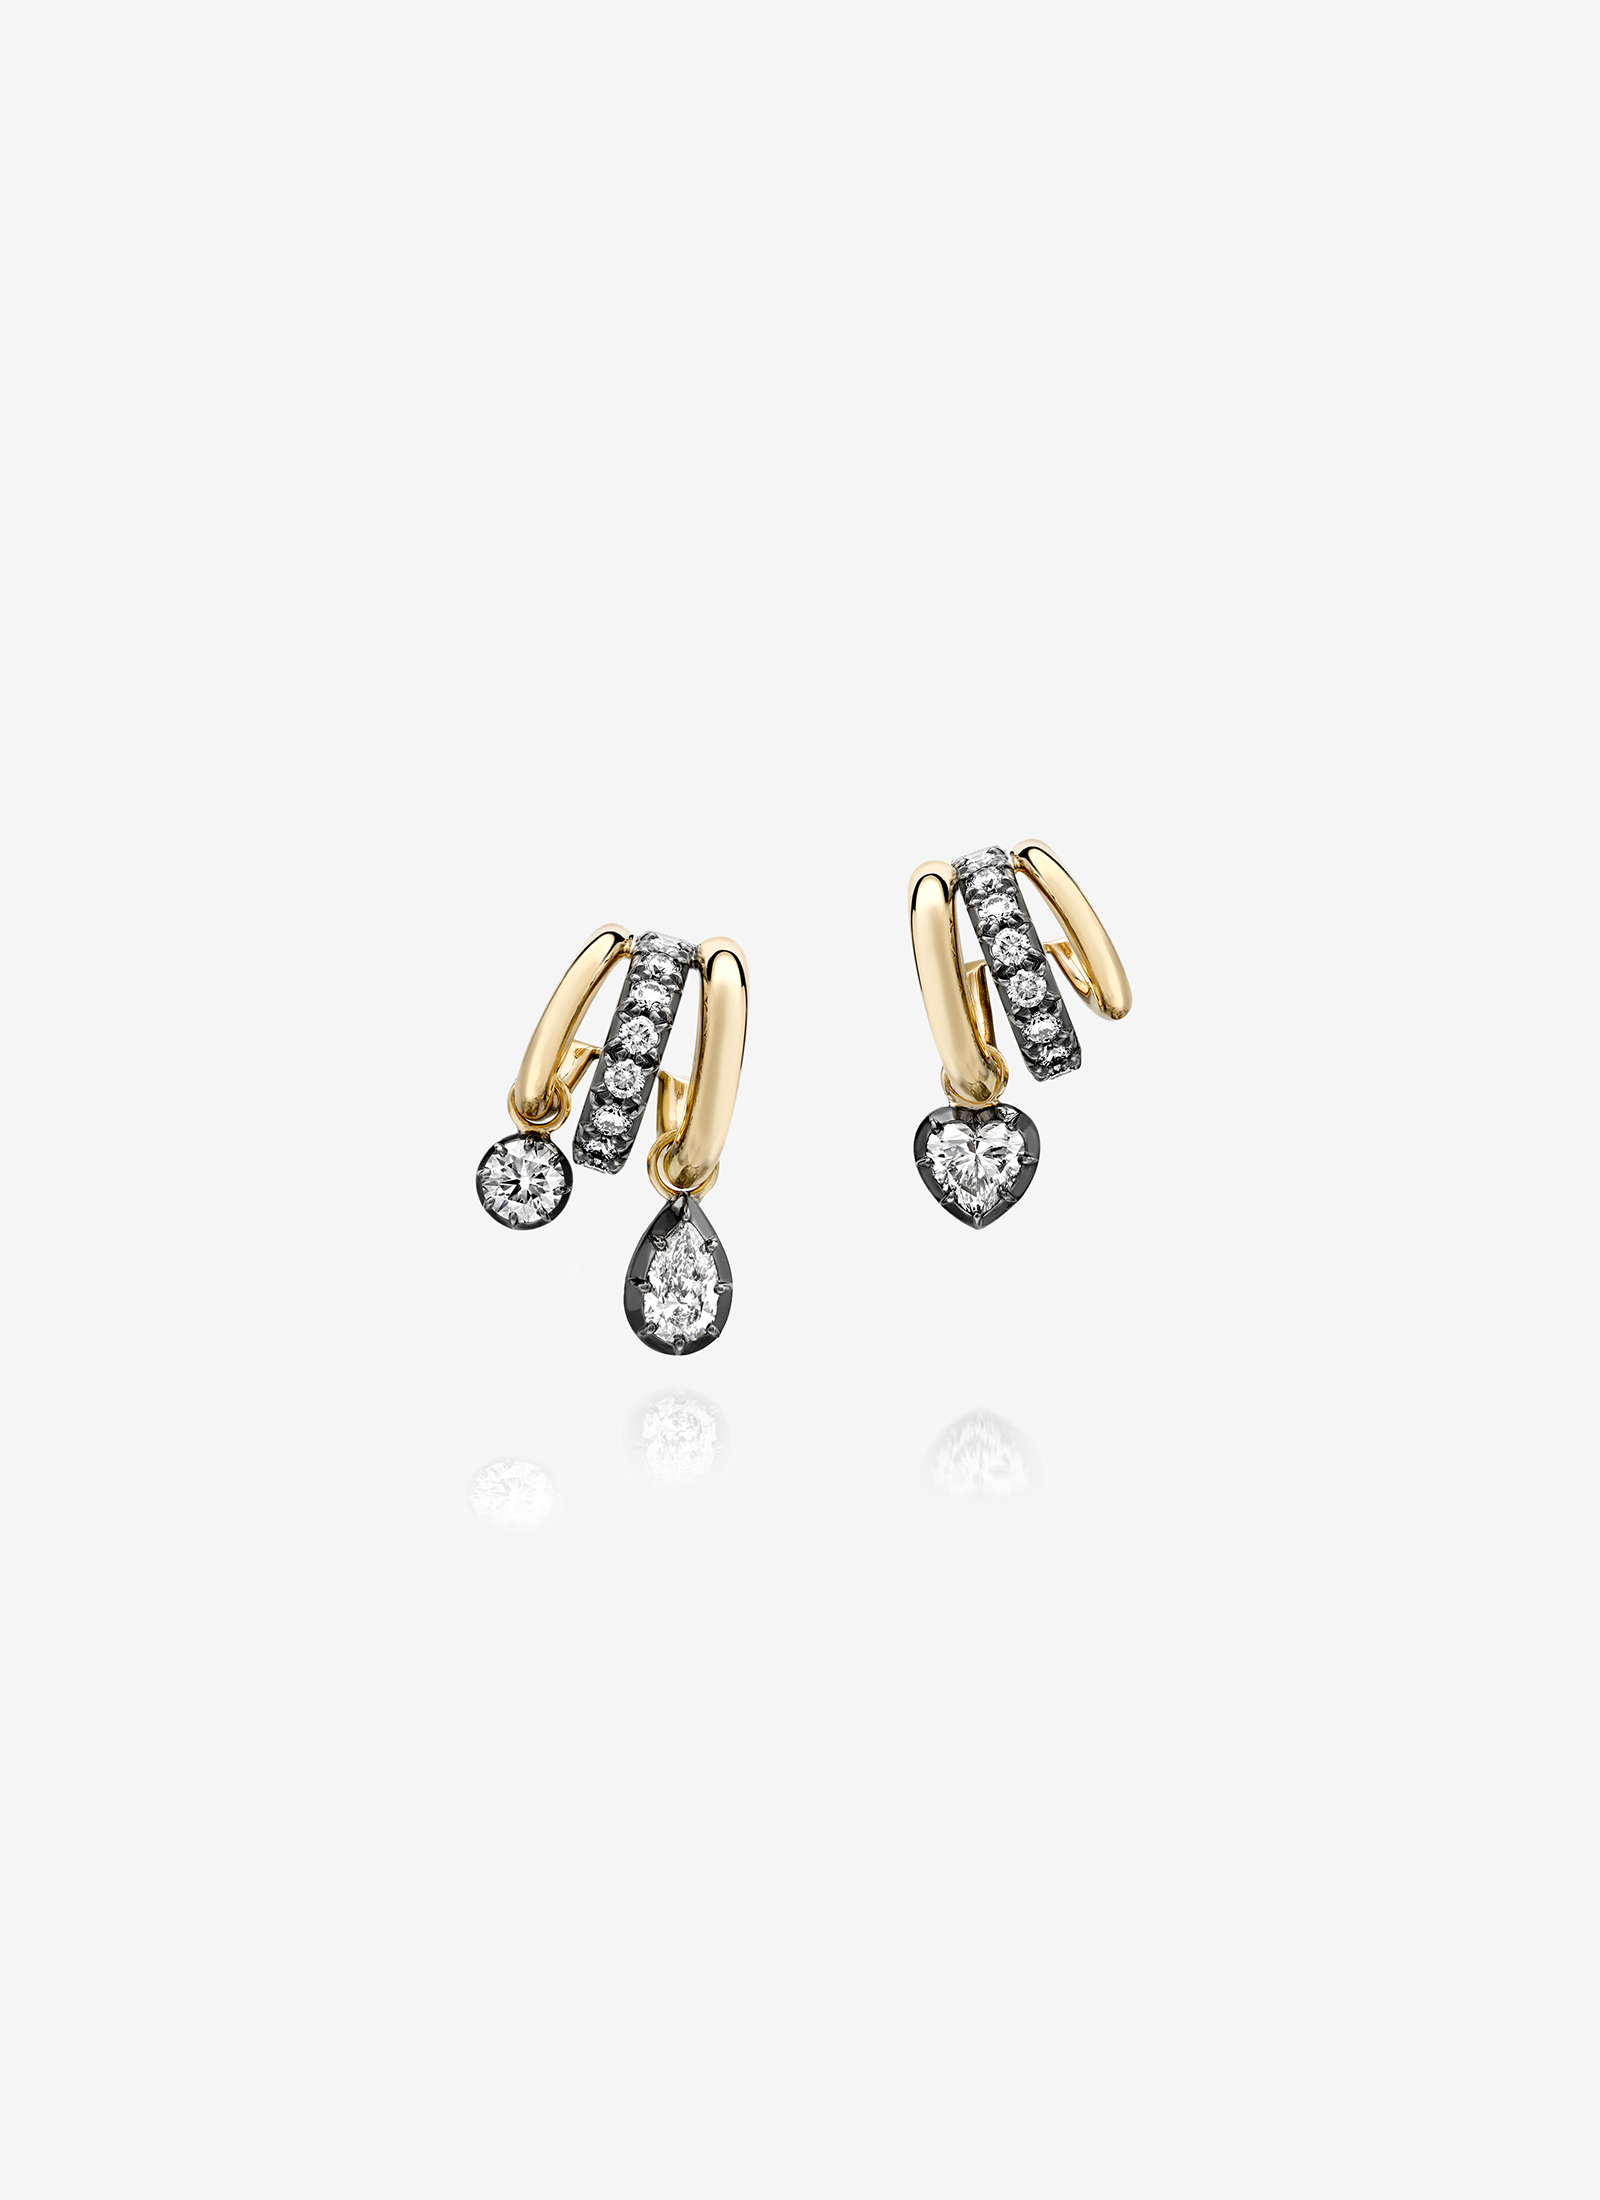 Signature Earrings - Multi-Shape Diamond Tripset Hoops